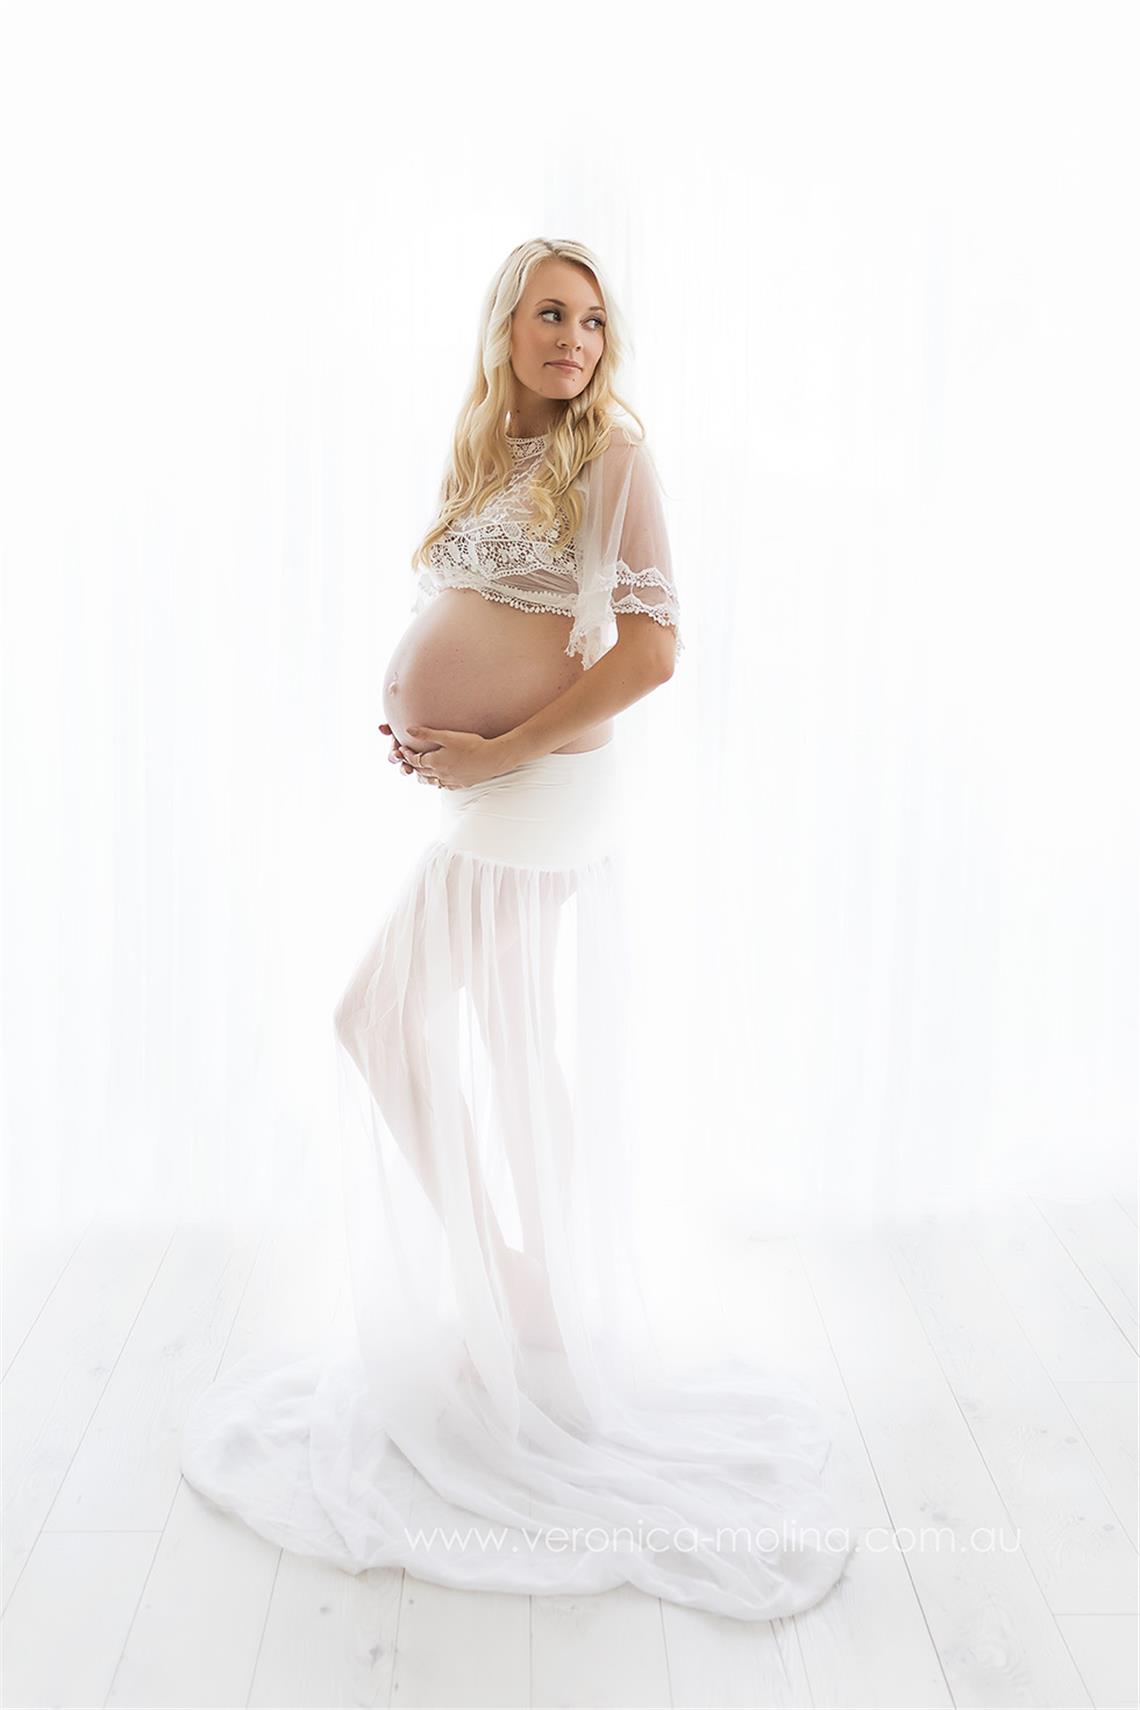 Maternity and newborn photography Brisbane Southside - Photo 4